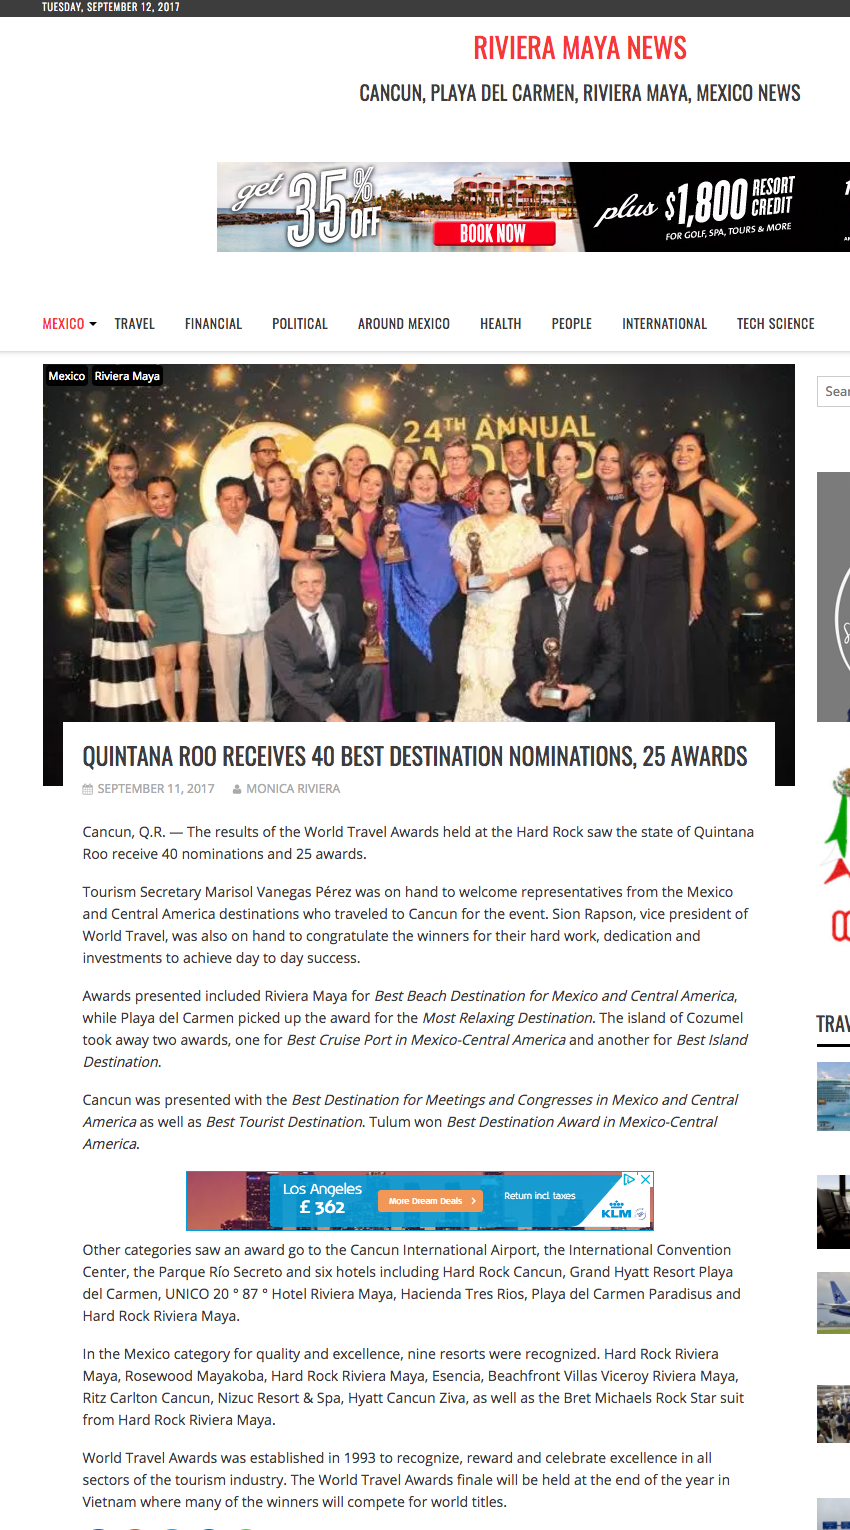 Quintana Roo receives 40 best destination nominations, 25 awards